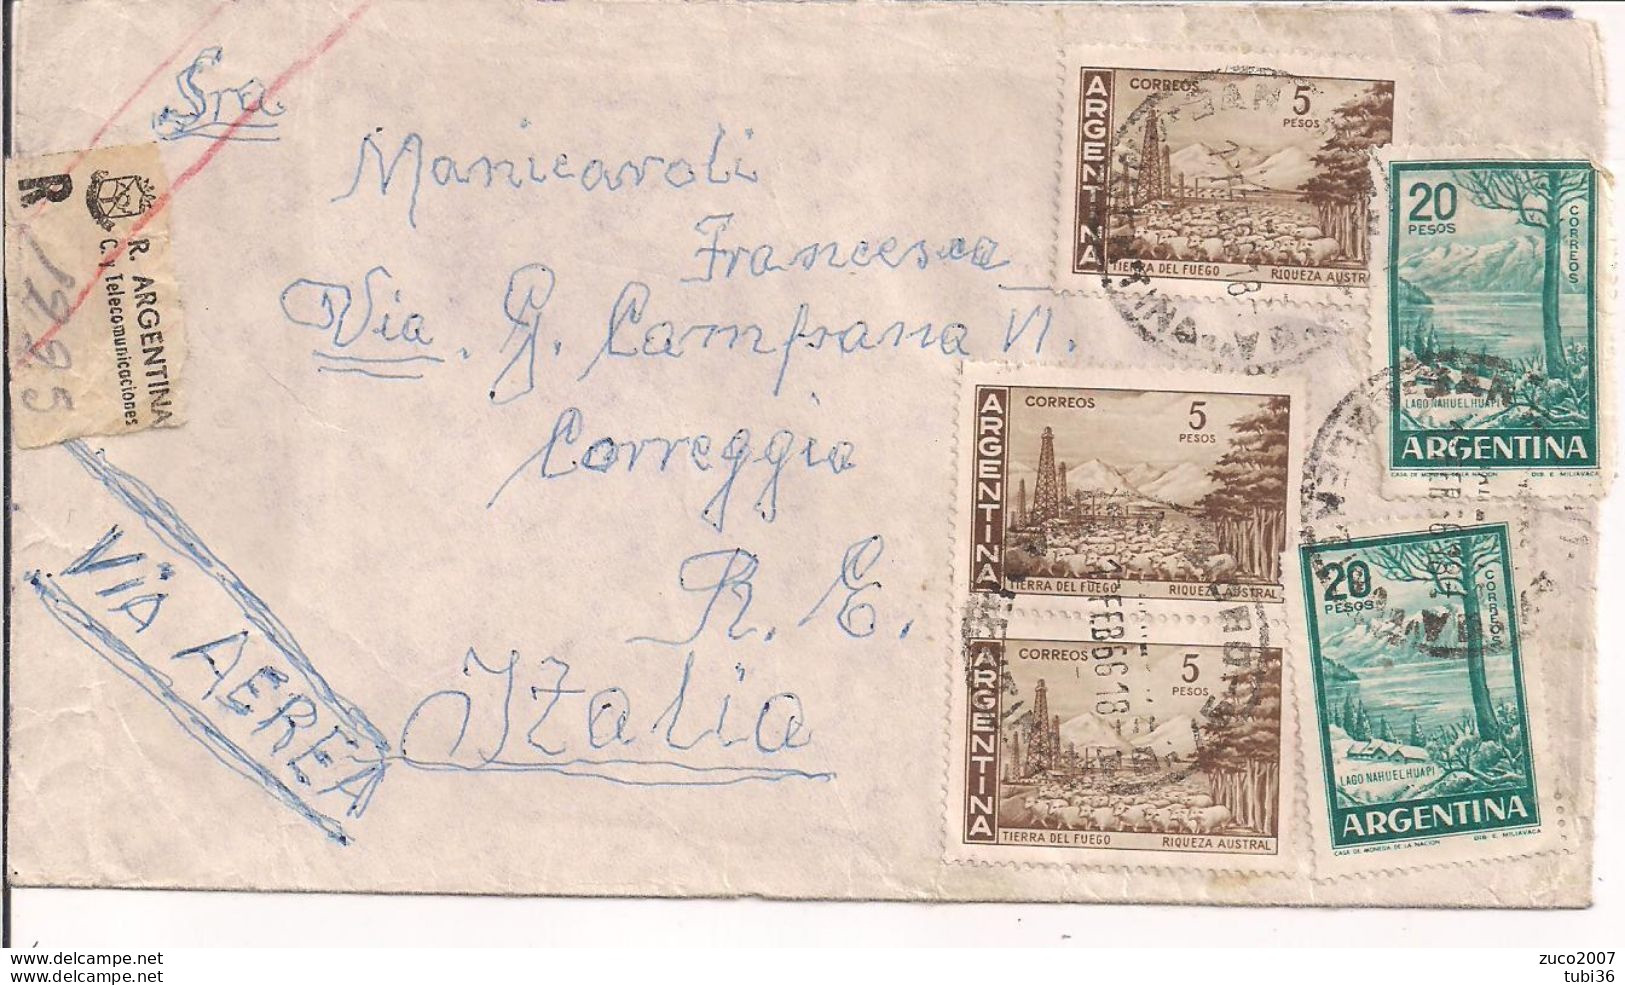 ARGENTINA- LETTERA VIA AEREA RACCOMANDATA -  TIMBRO POSTE BUENOSAIRES, 1966 - REGGIO EMILIA - Covers & Documents